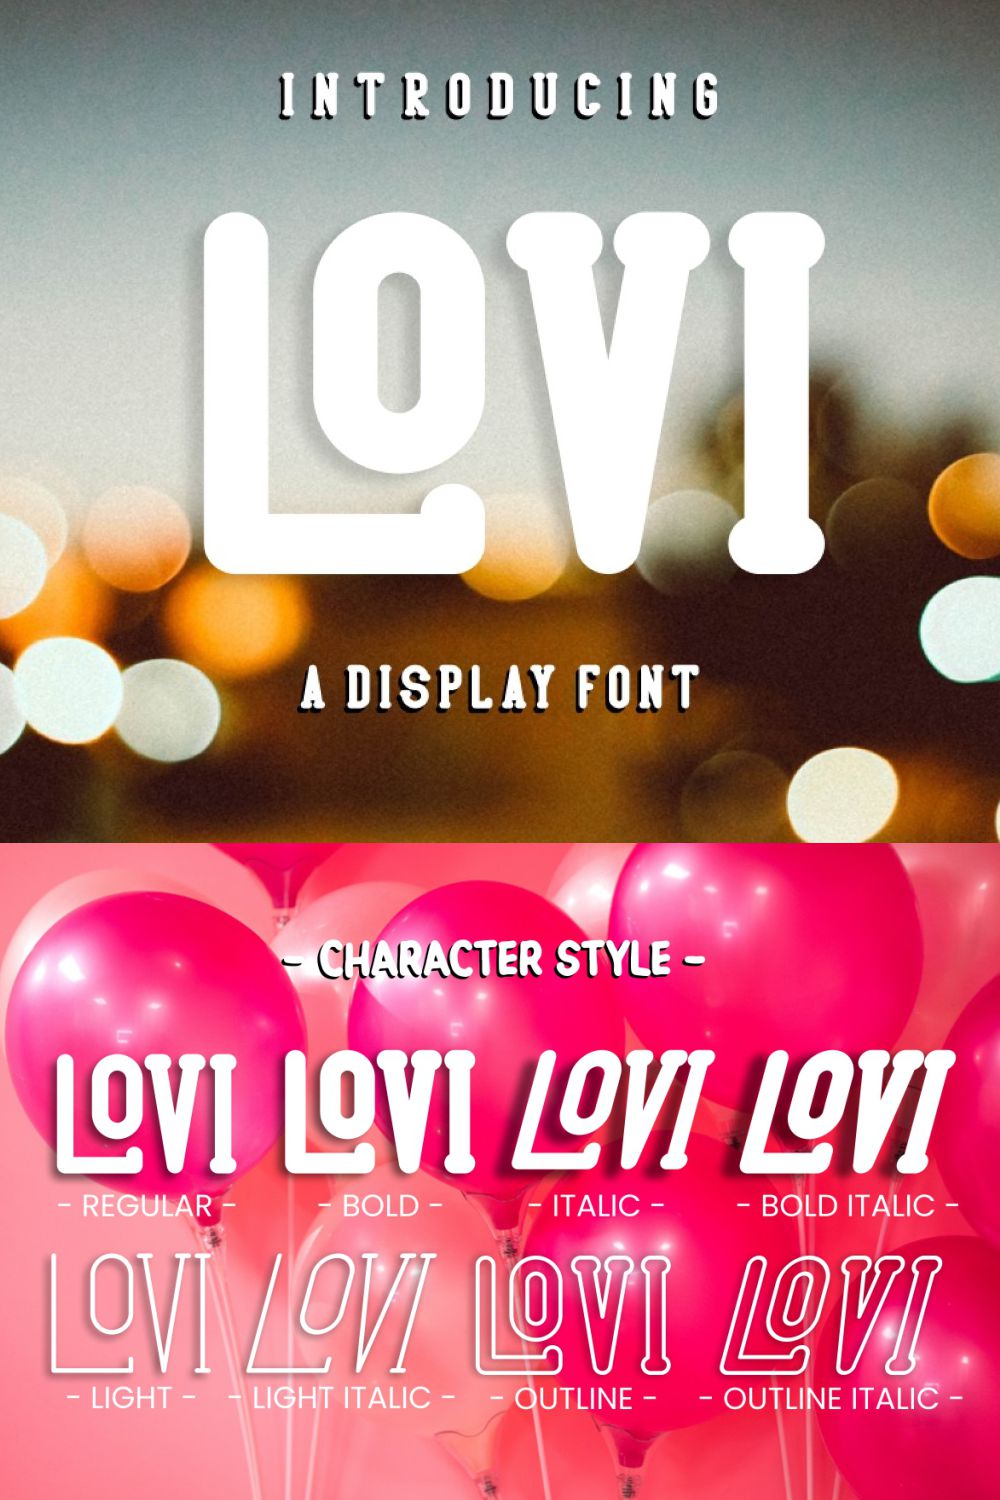 Lovi - Fun Display Font pinterest preview image.